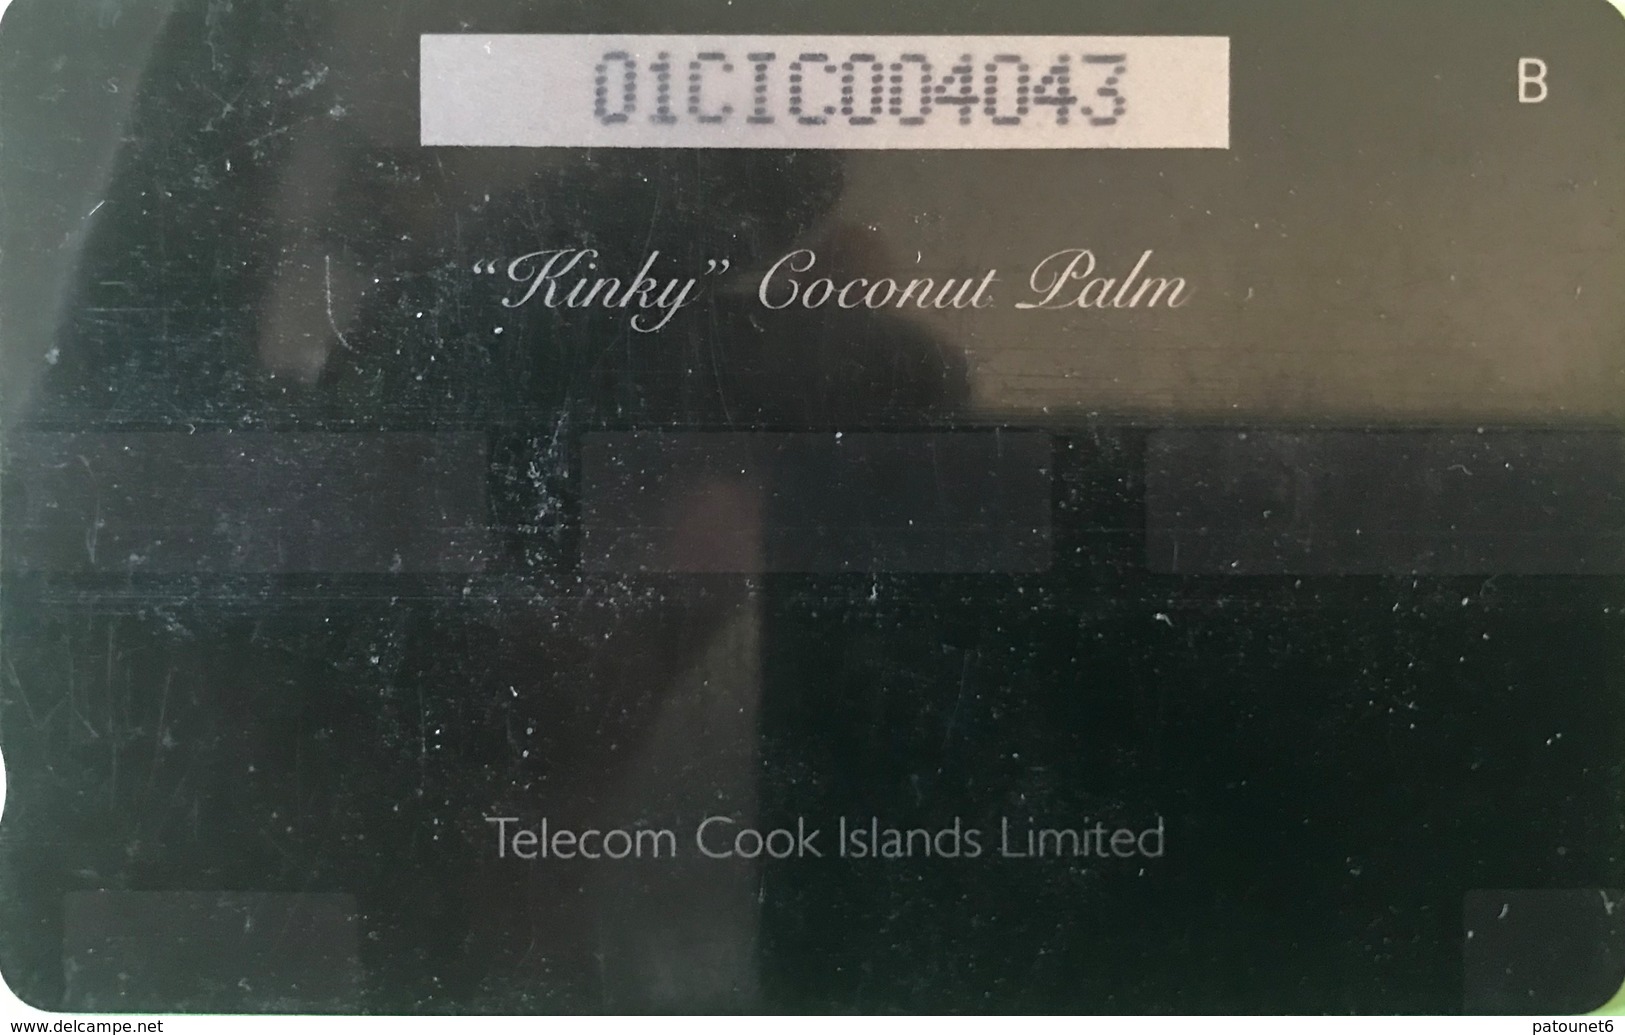 ILES COOK  -  Phonecard  -  " Ei Katu "   Kinky Coconut Palm  -  $10  -  TCI - Iles Cook